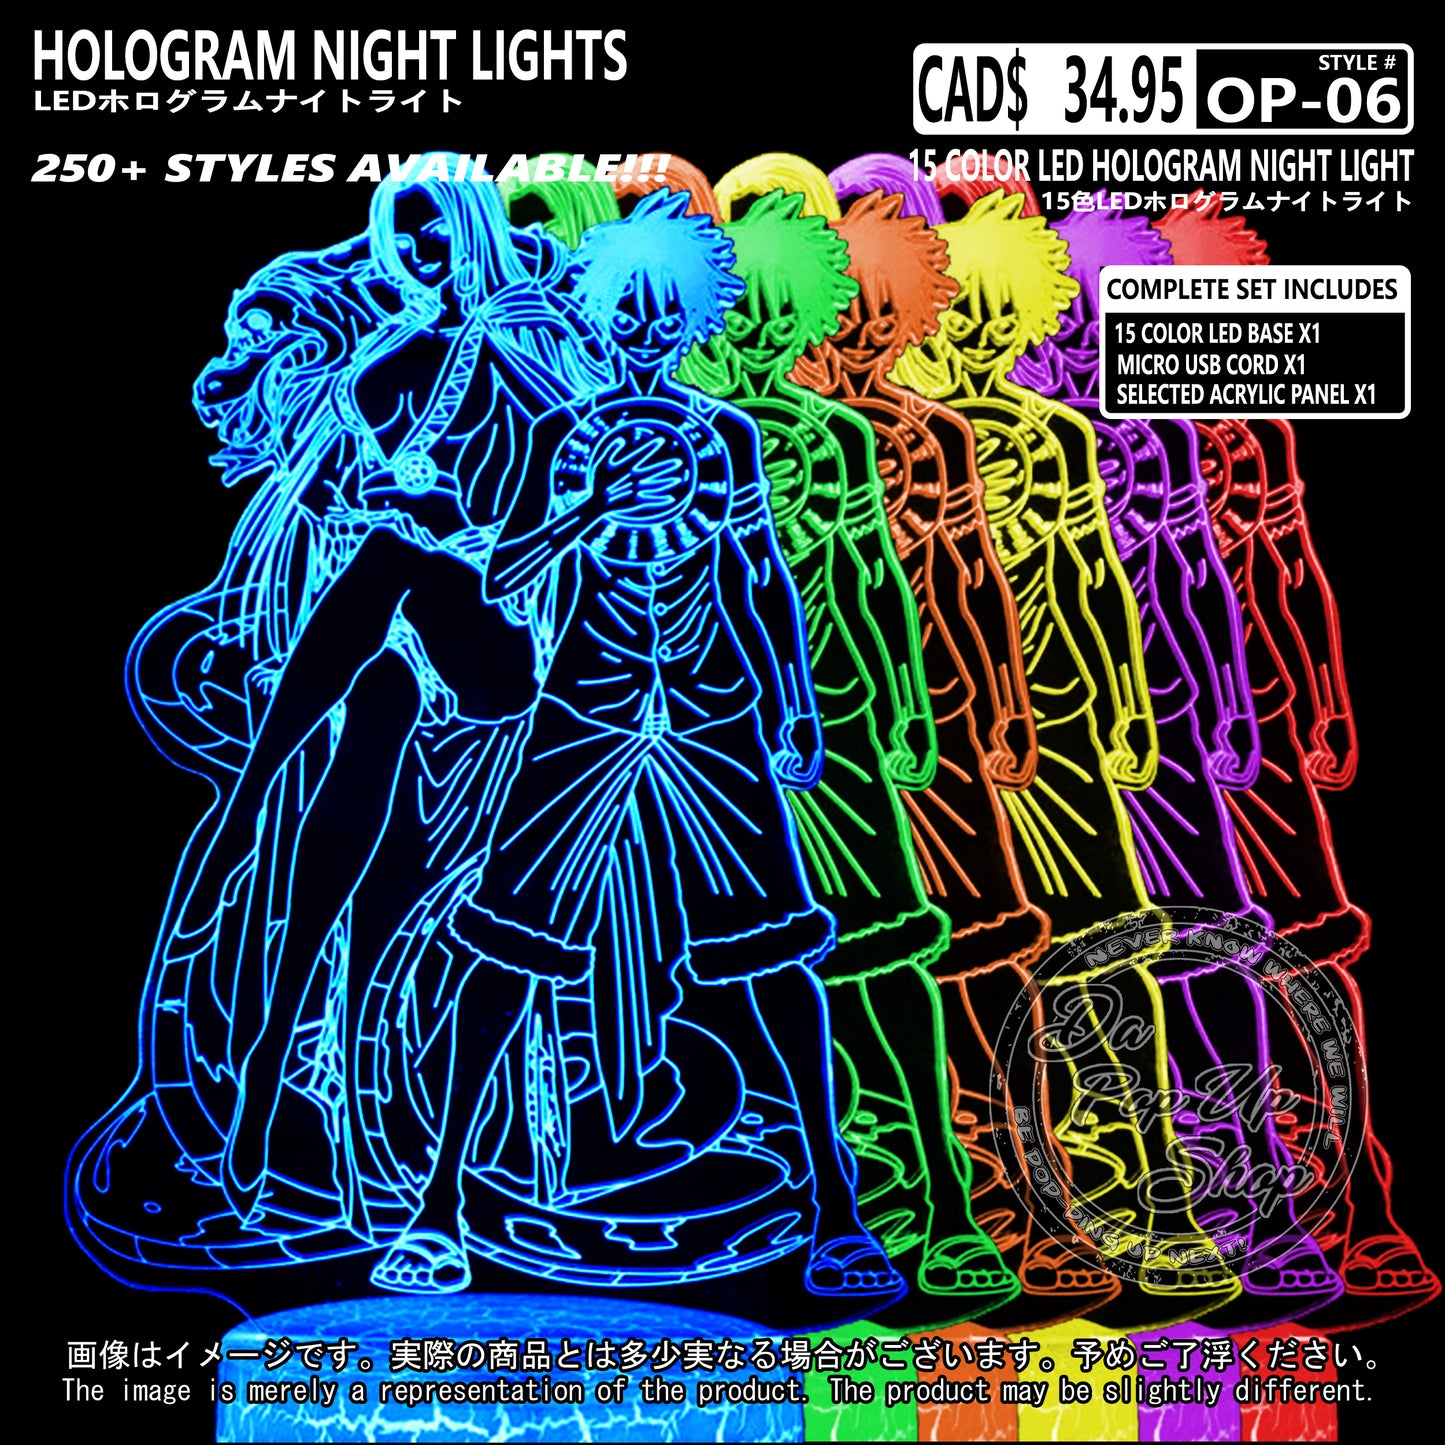 (OP-06) One Piece Hologram LED Night Light